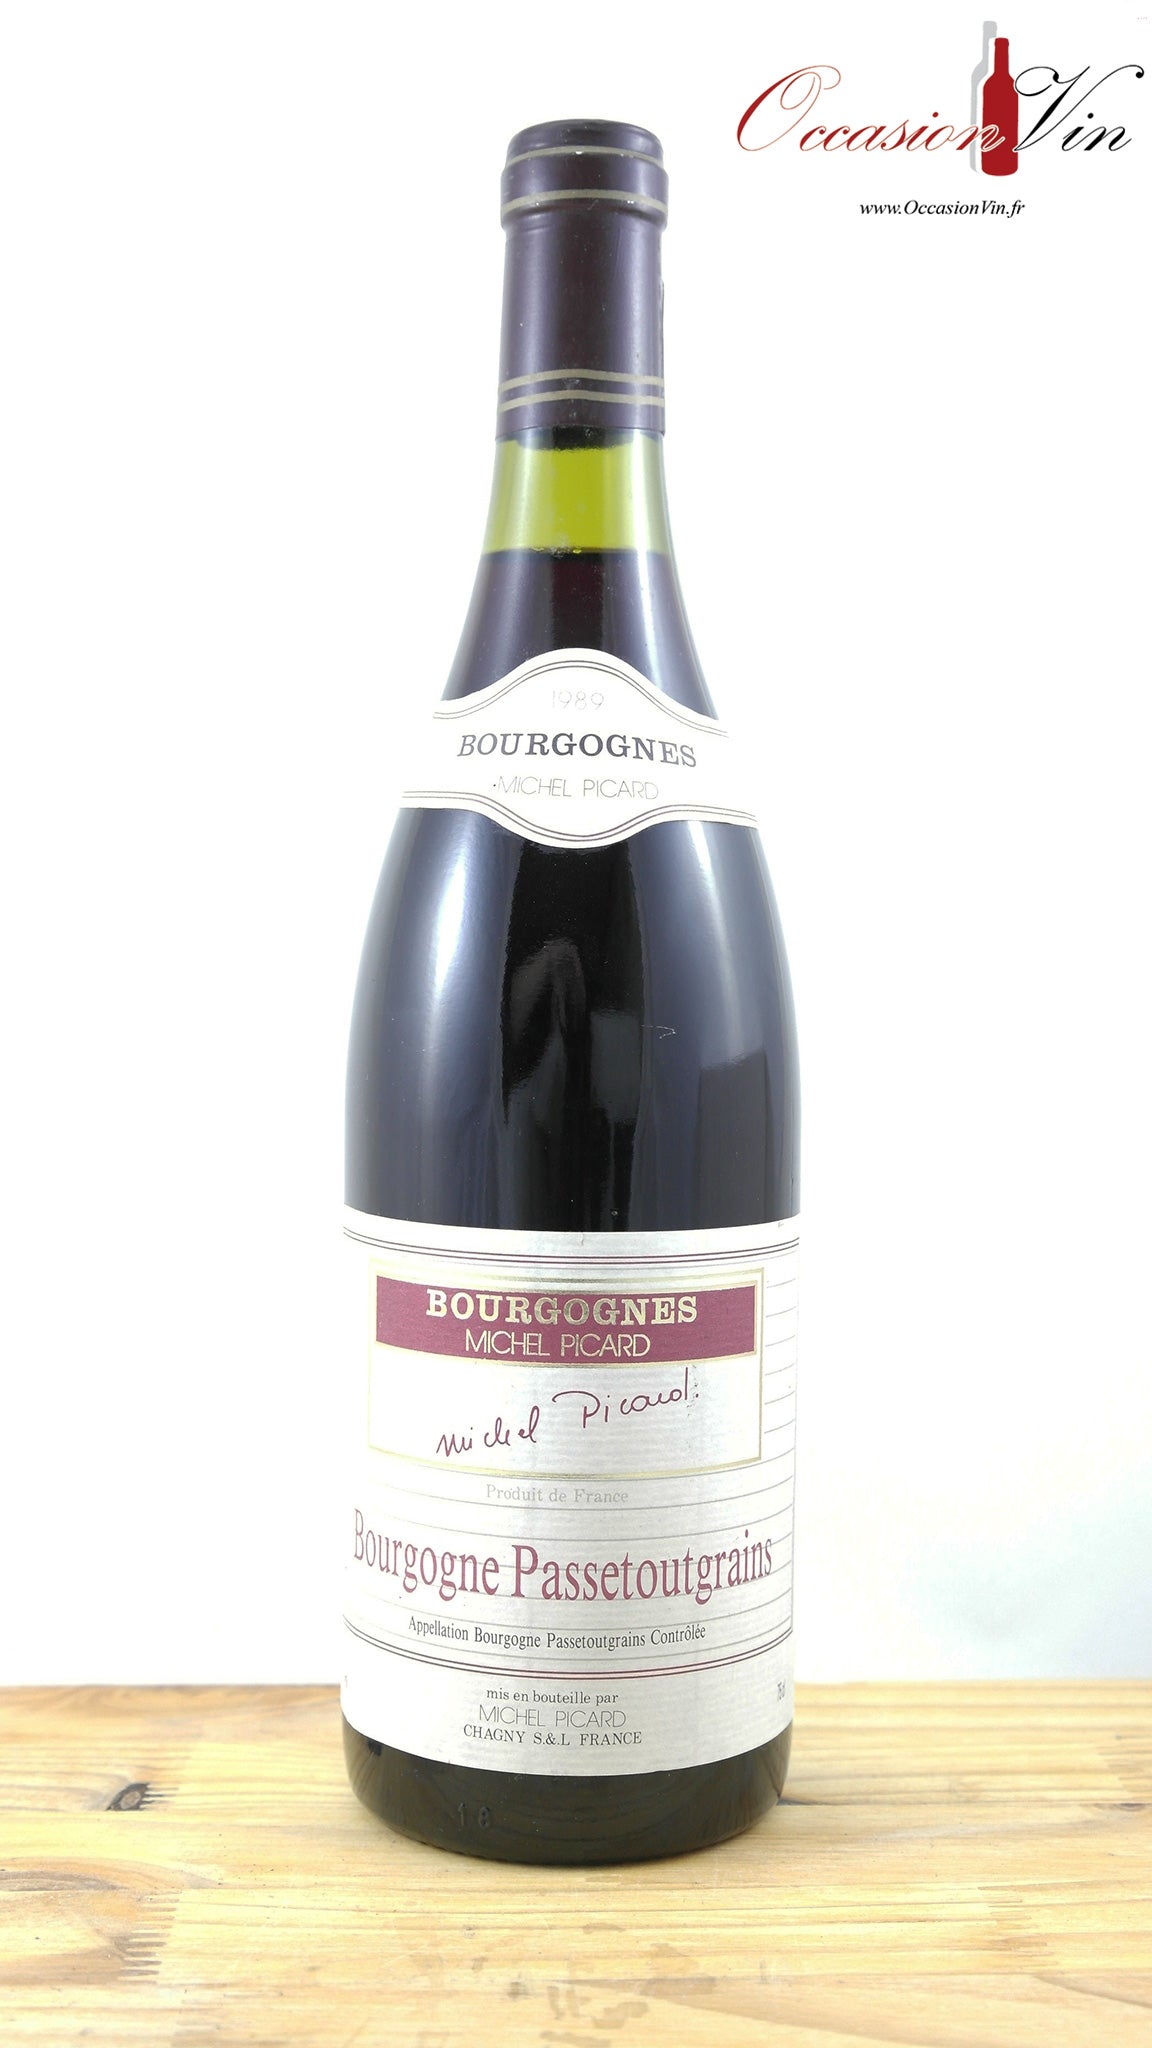 Bourgogne Passetoutgrain Michel Picard Vin 1989